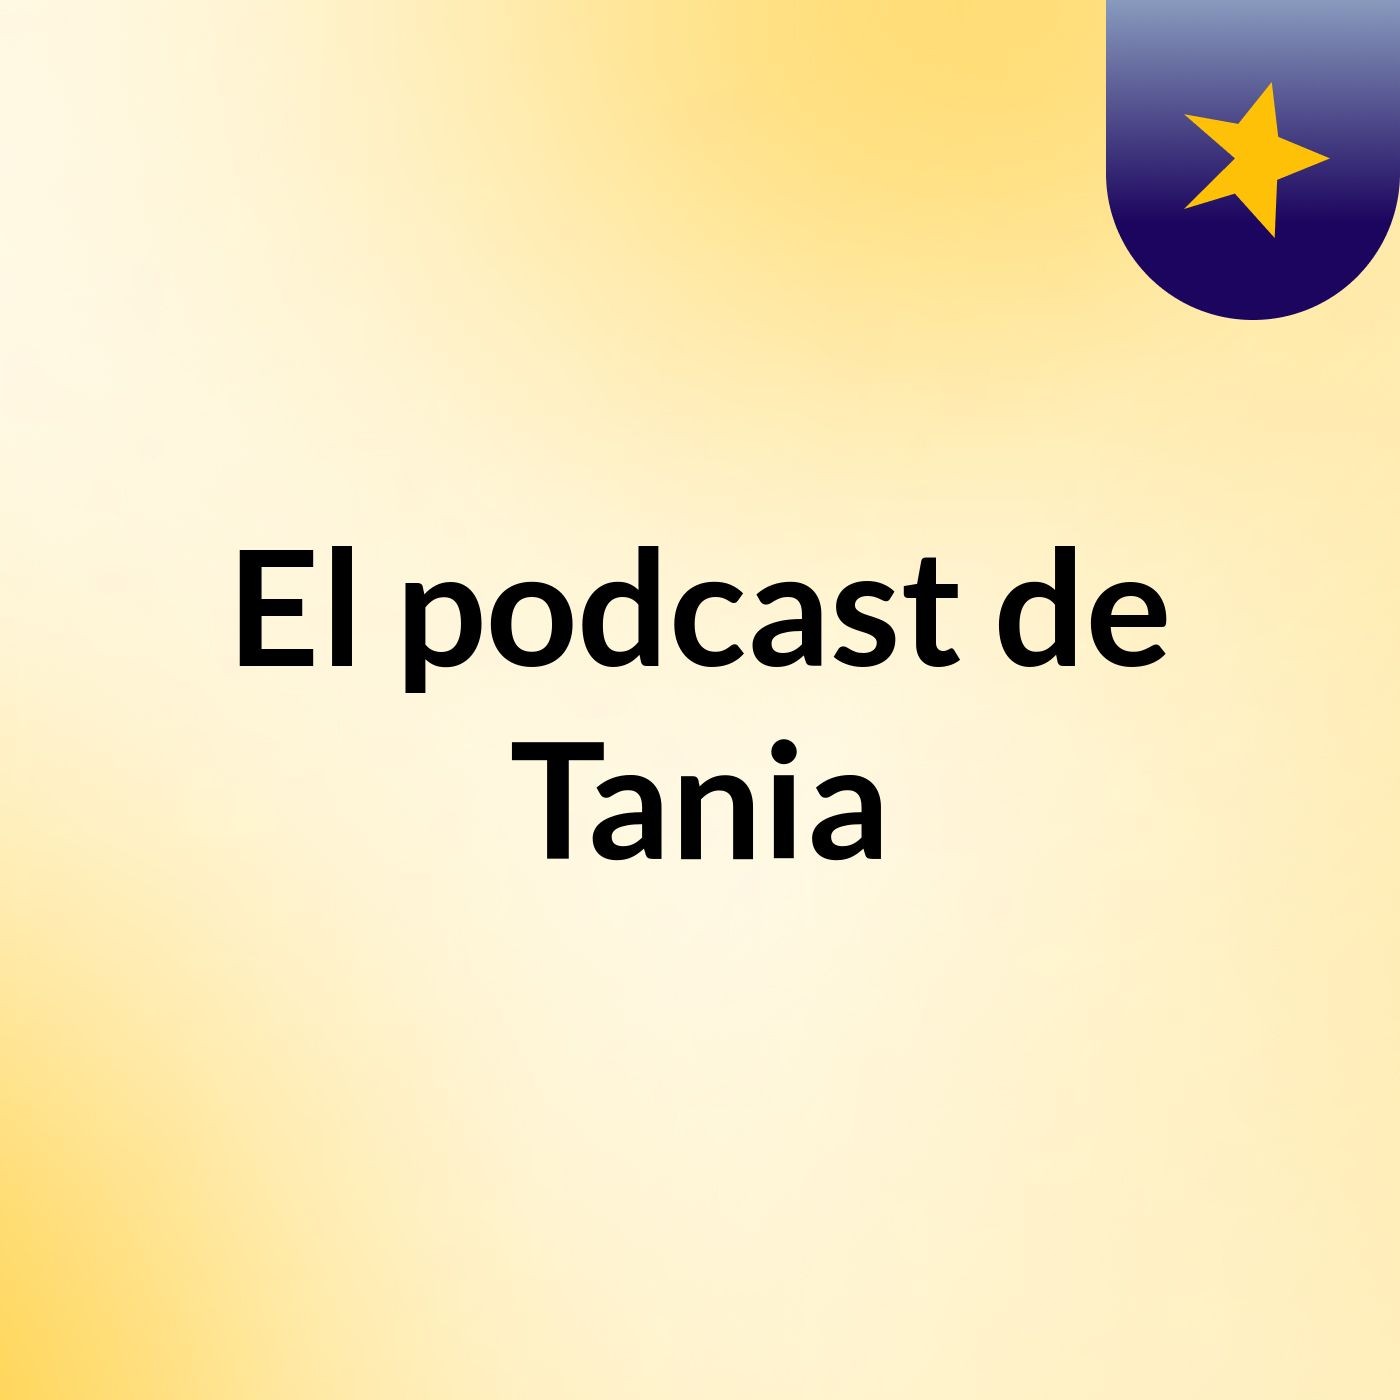 Episodio 7 - El podcast de Tania